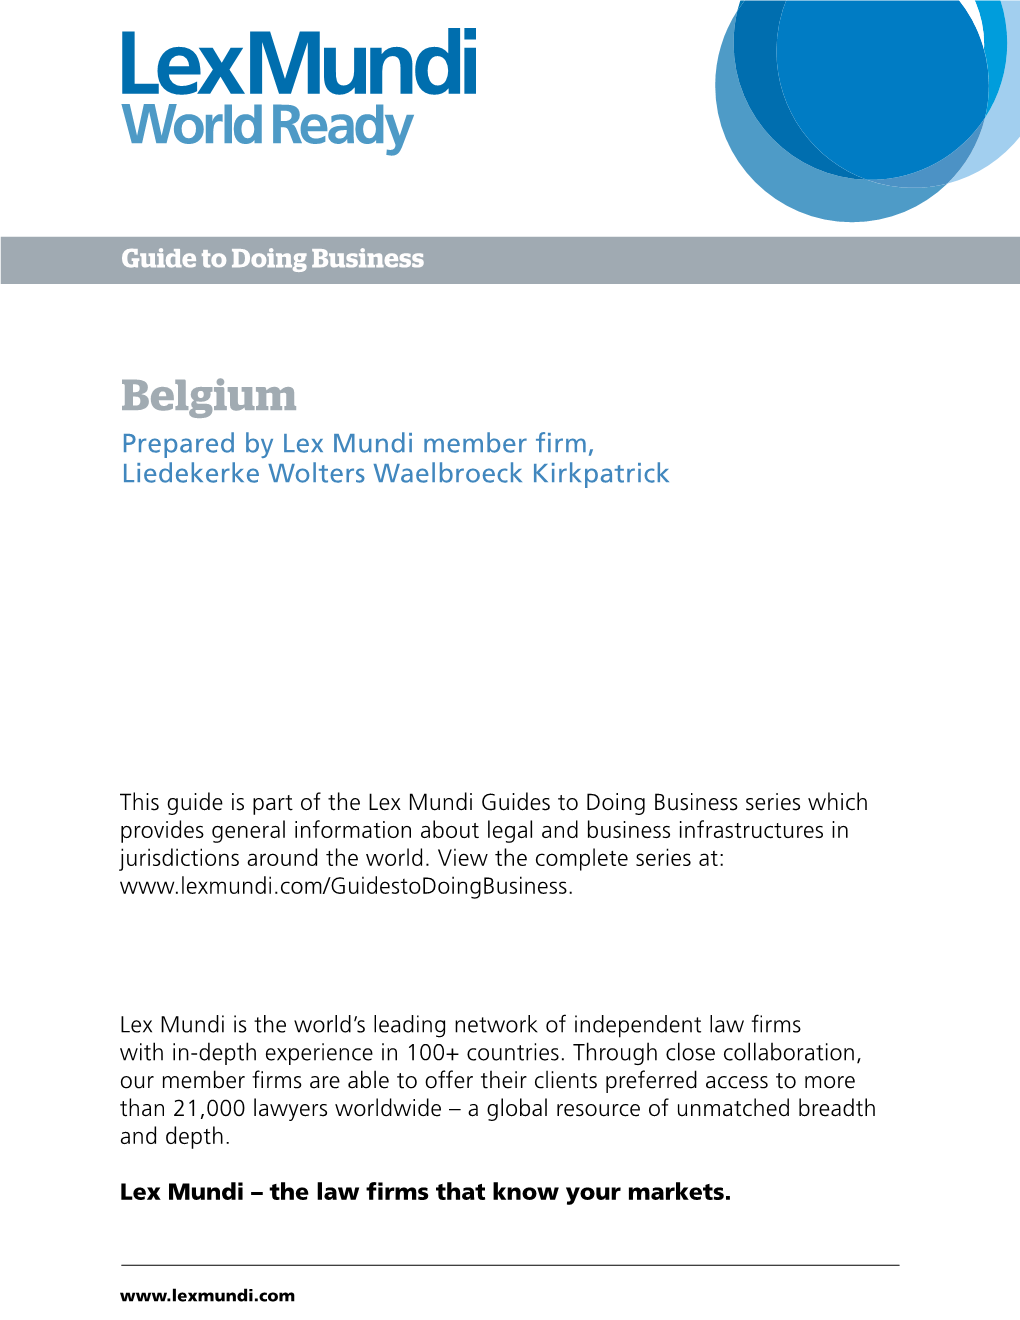 Belgium Prepared by Lex Mundi Member Firm, Liedekerke Wolters Waelbroeck Kirkpatrick